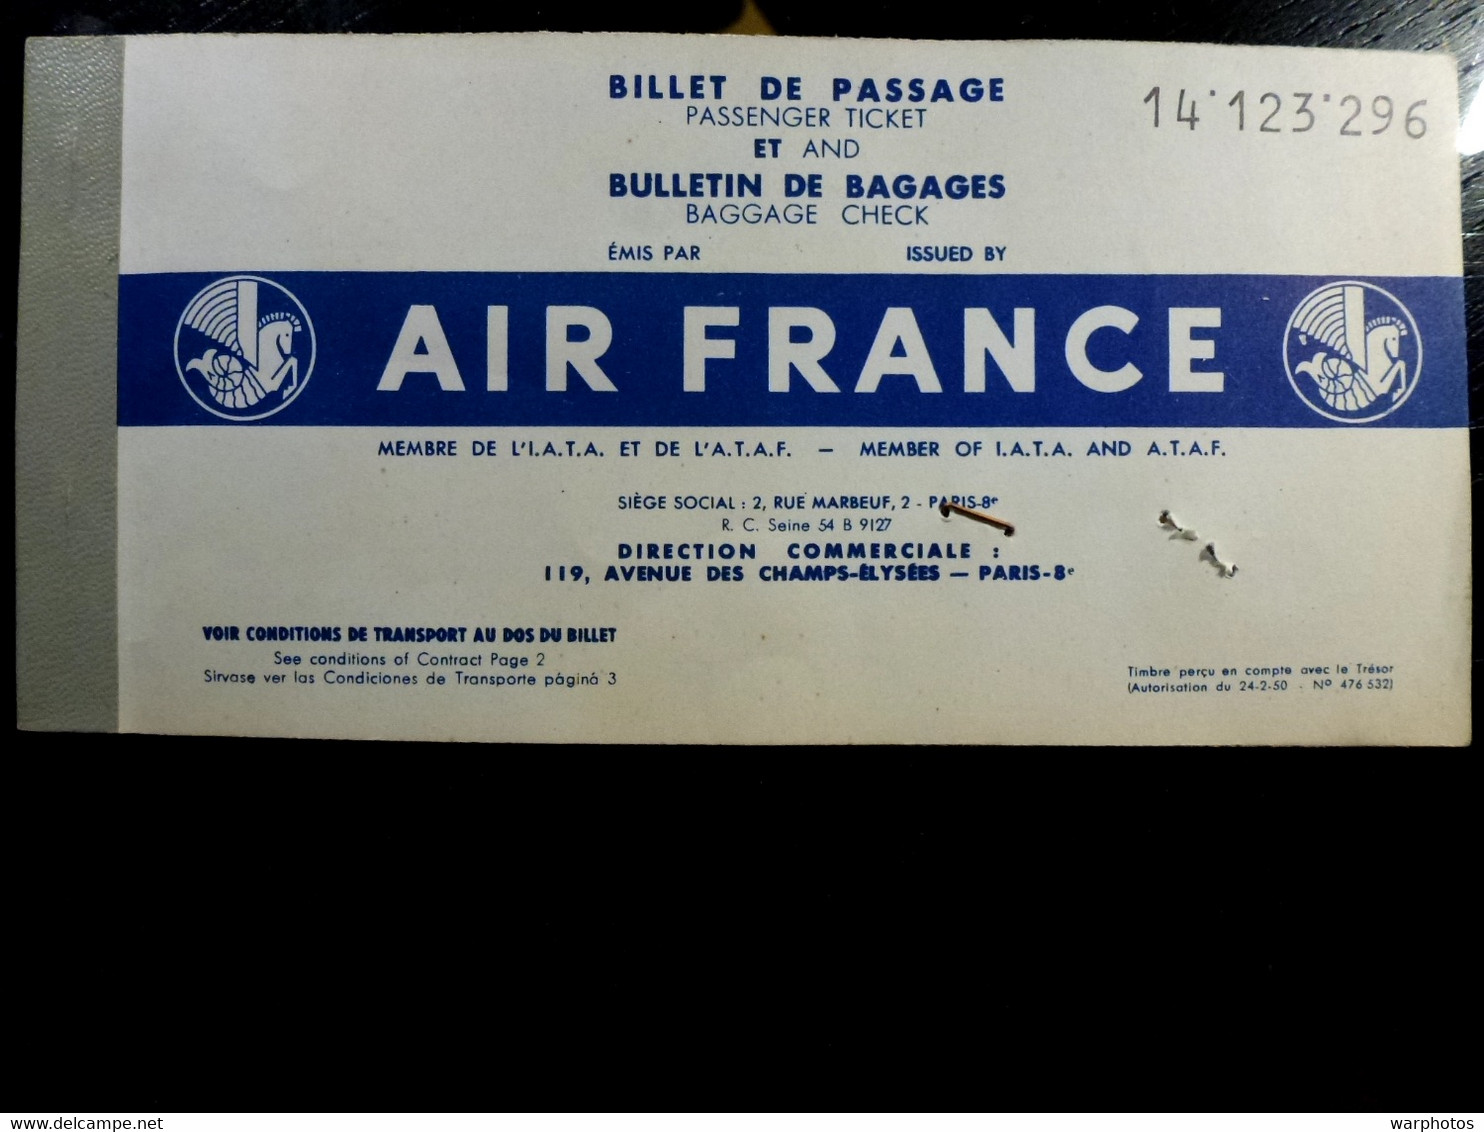 CARTE D'EMBARQUEMENT : 1961 _ AIR FRANCE _ PARIS - NIMES _ Départ ORLY - Bordkarten